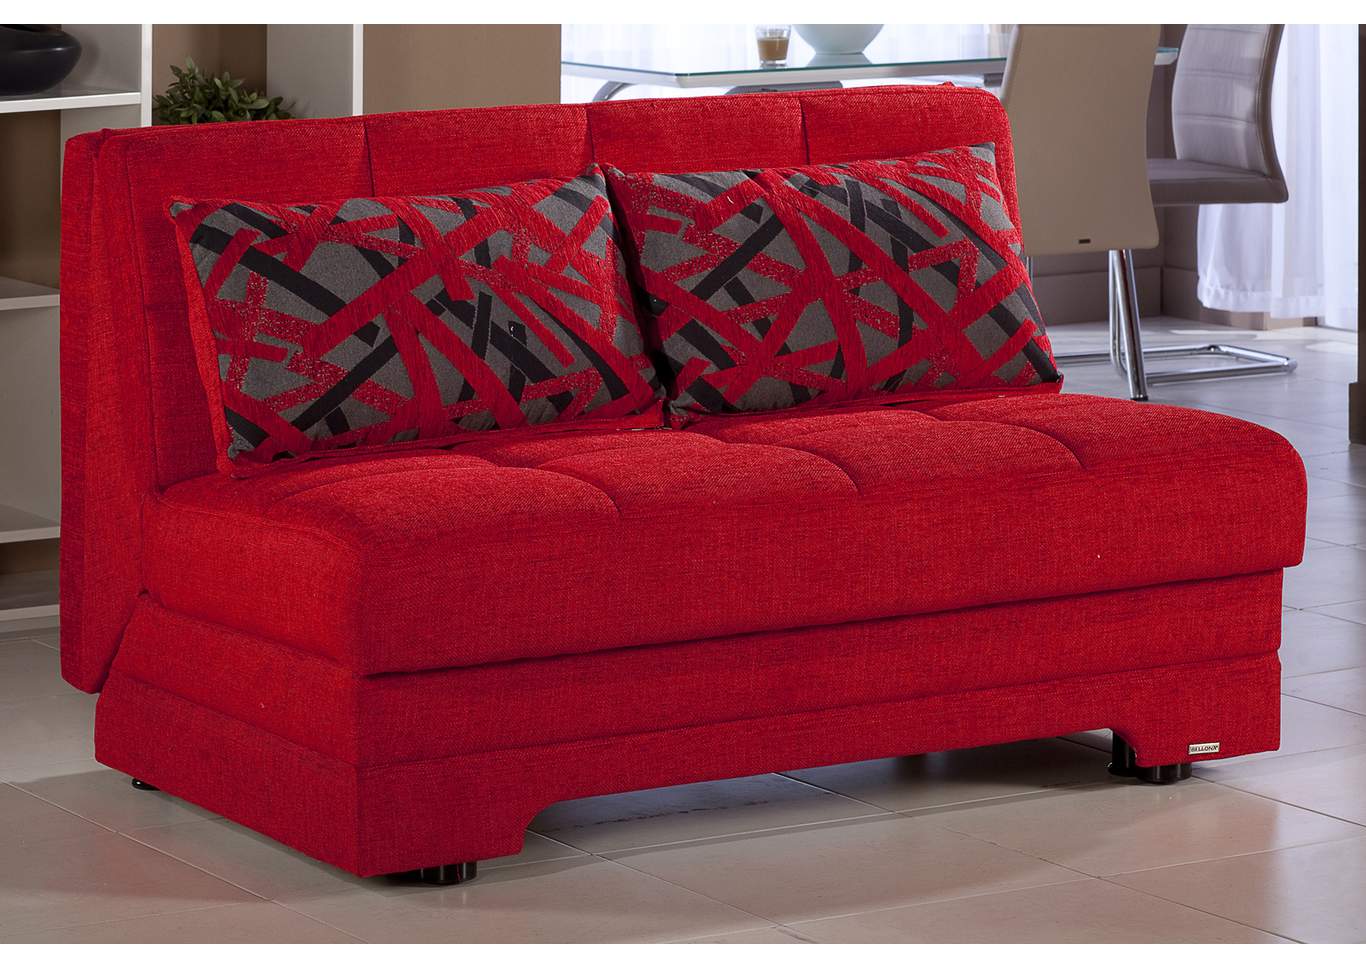 Twist Story Red Love Seat W/ Storage,Hudson Furniture & Bedding